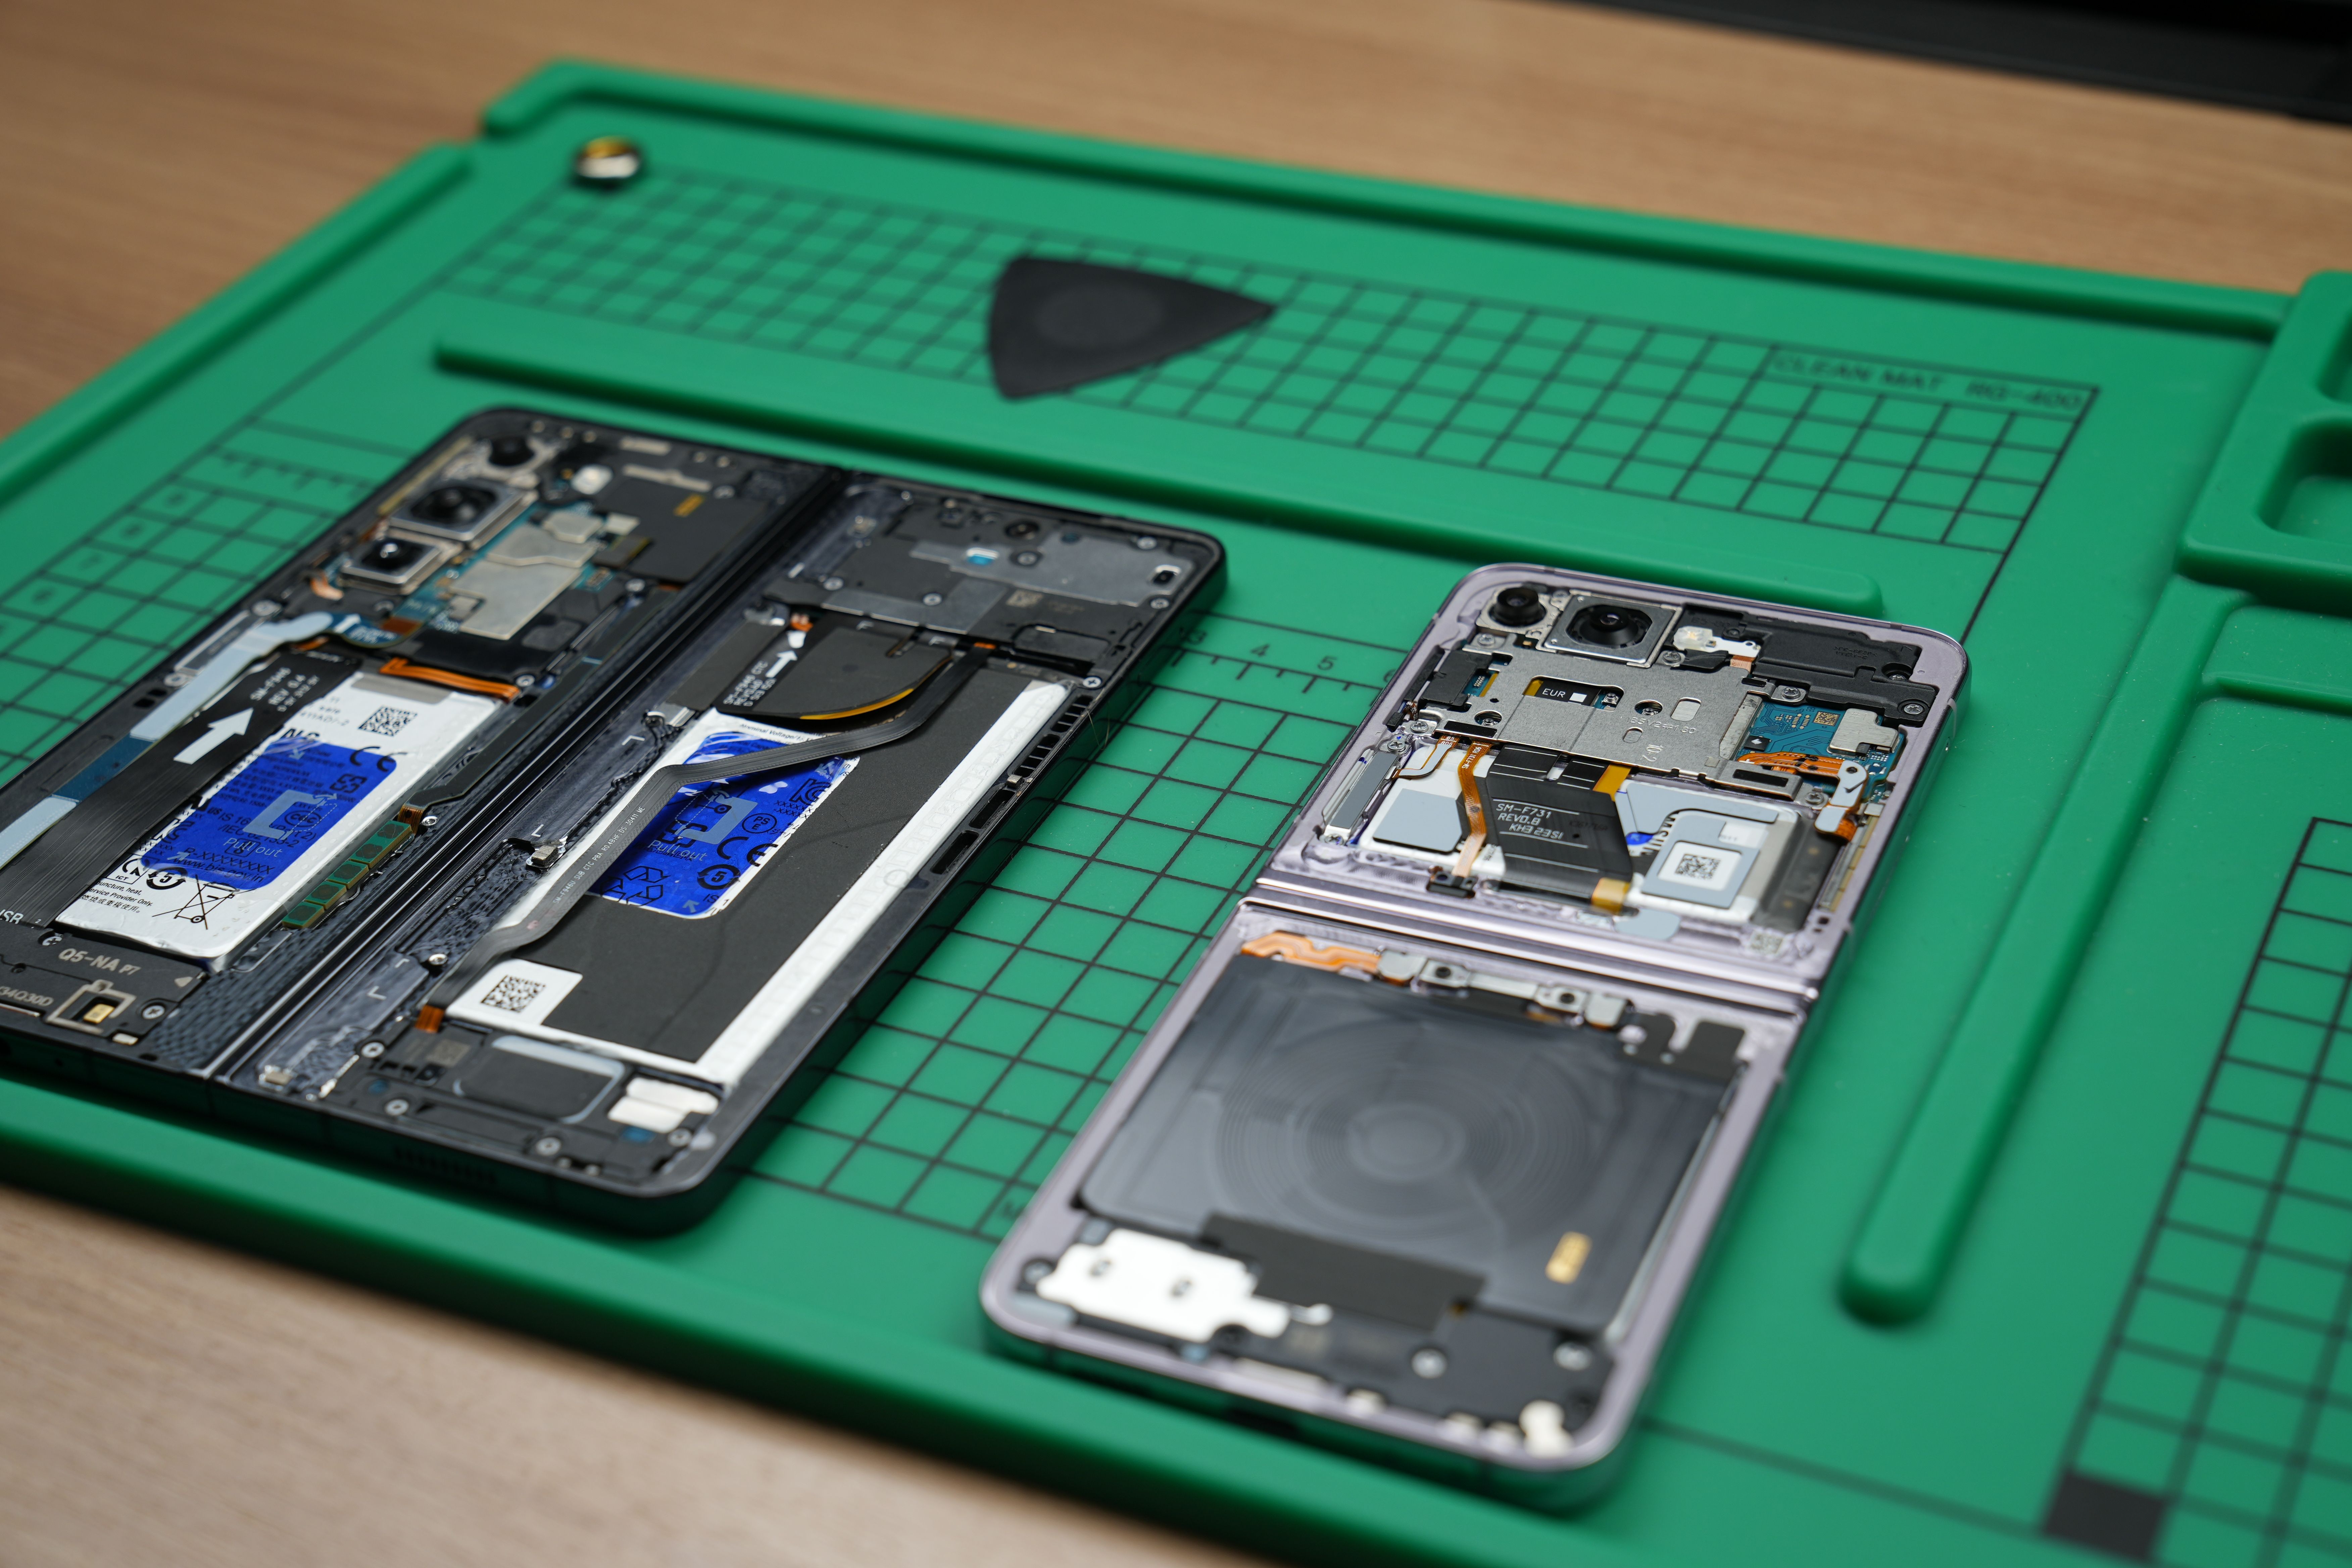 An image of a Samsung self-repair kit